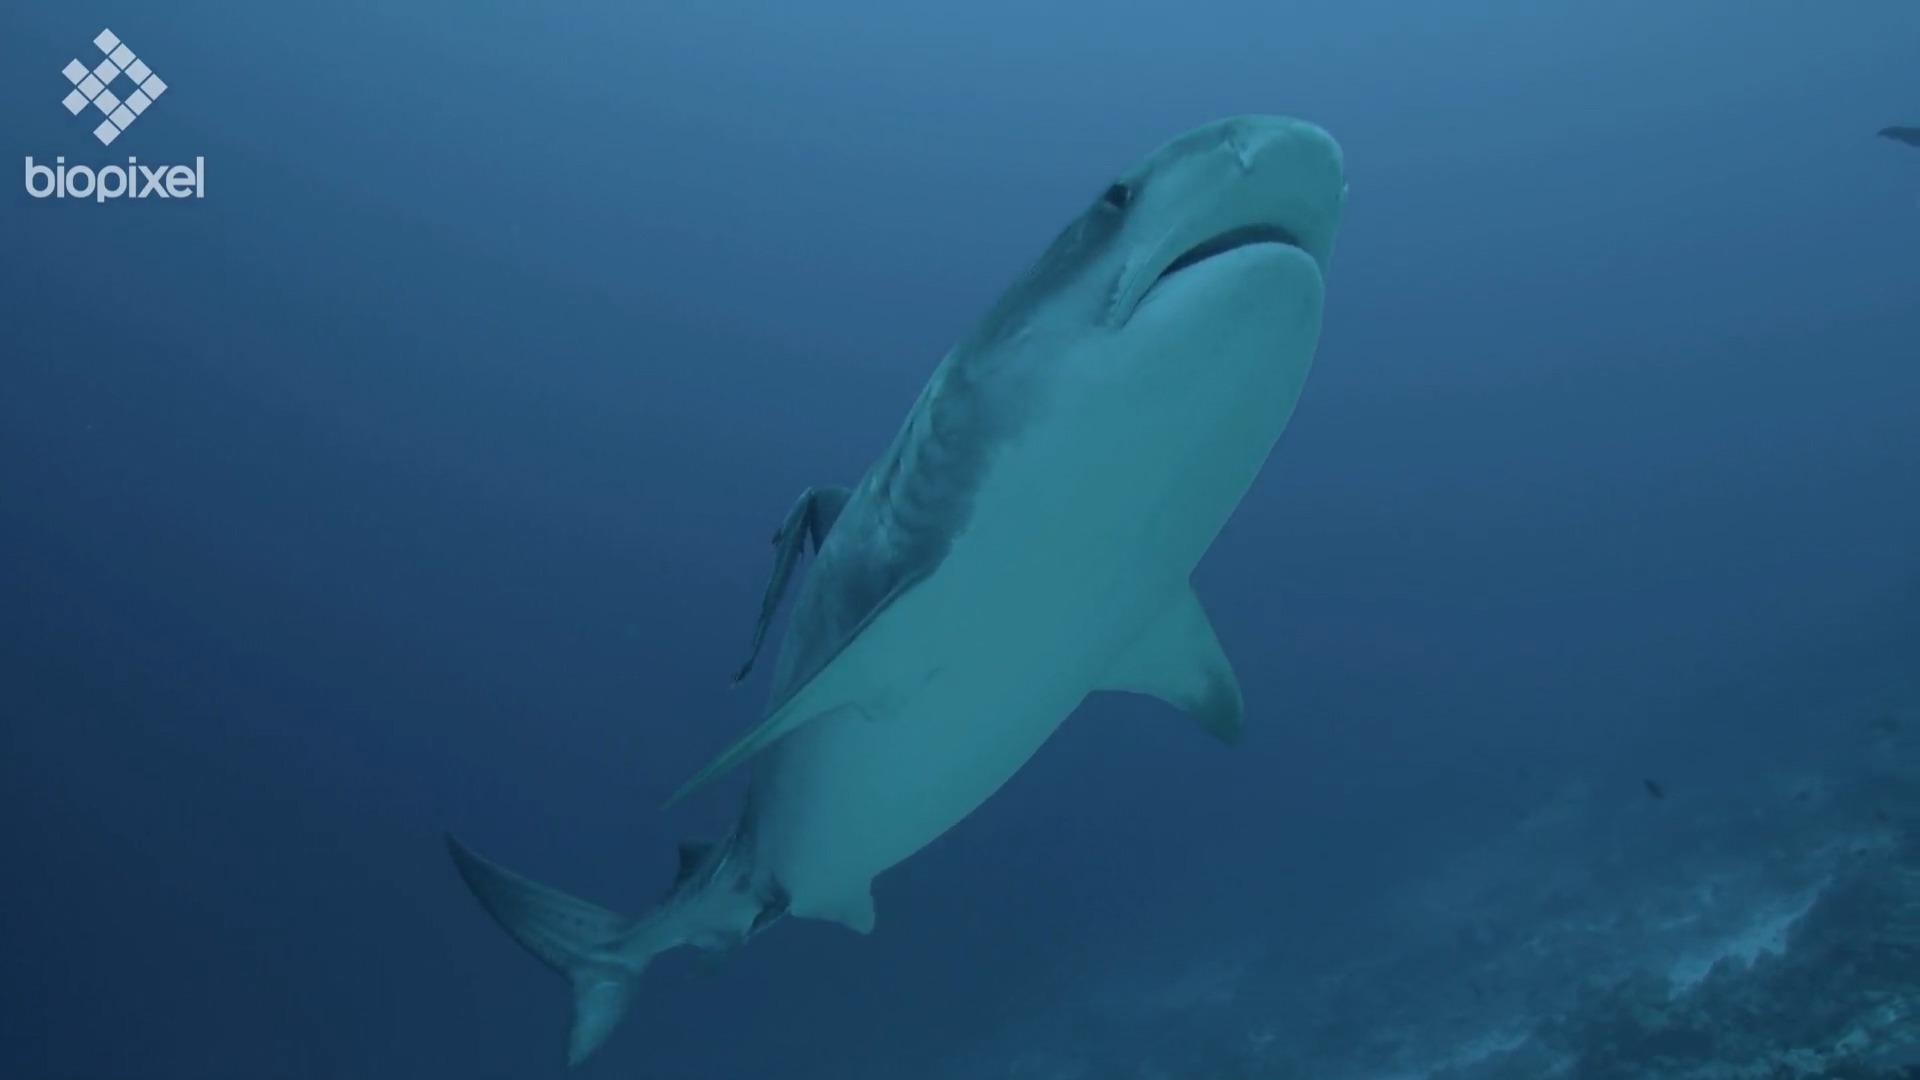 Tiger shark identification, biology and behavior